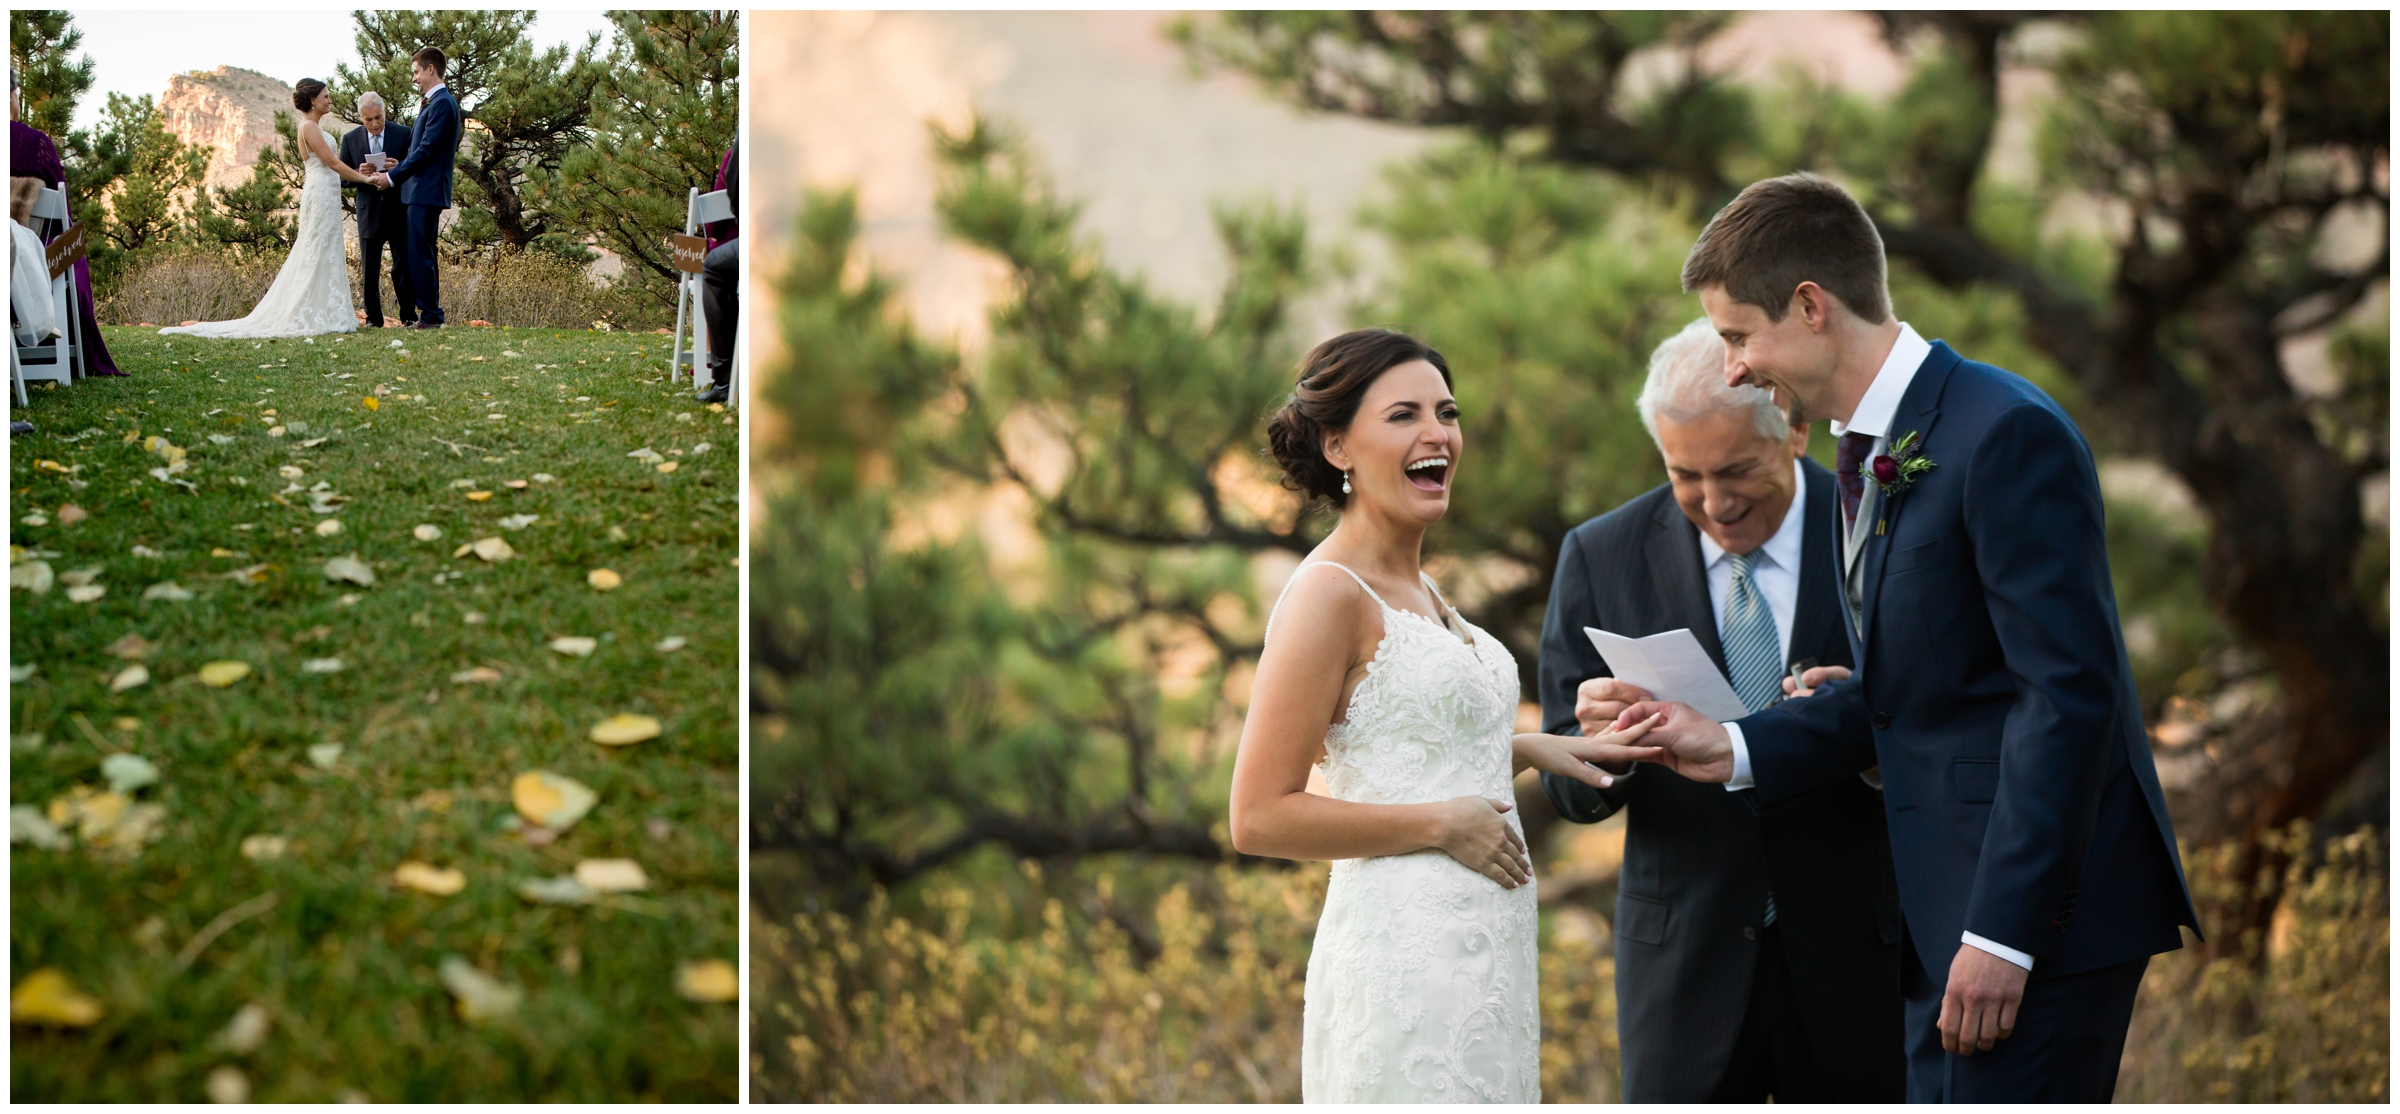 Colorado outdoor fall wedding ceremony at Lionscrest Manor 